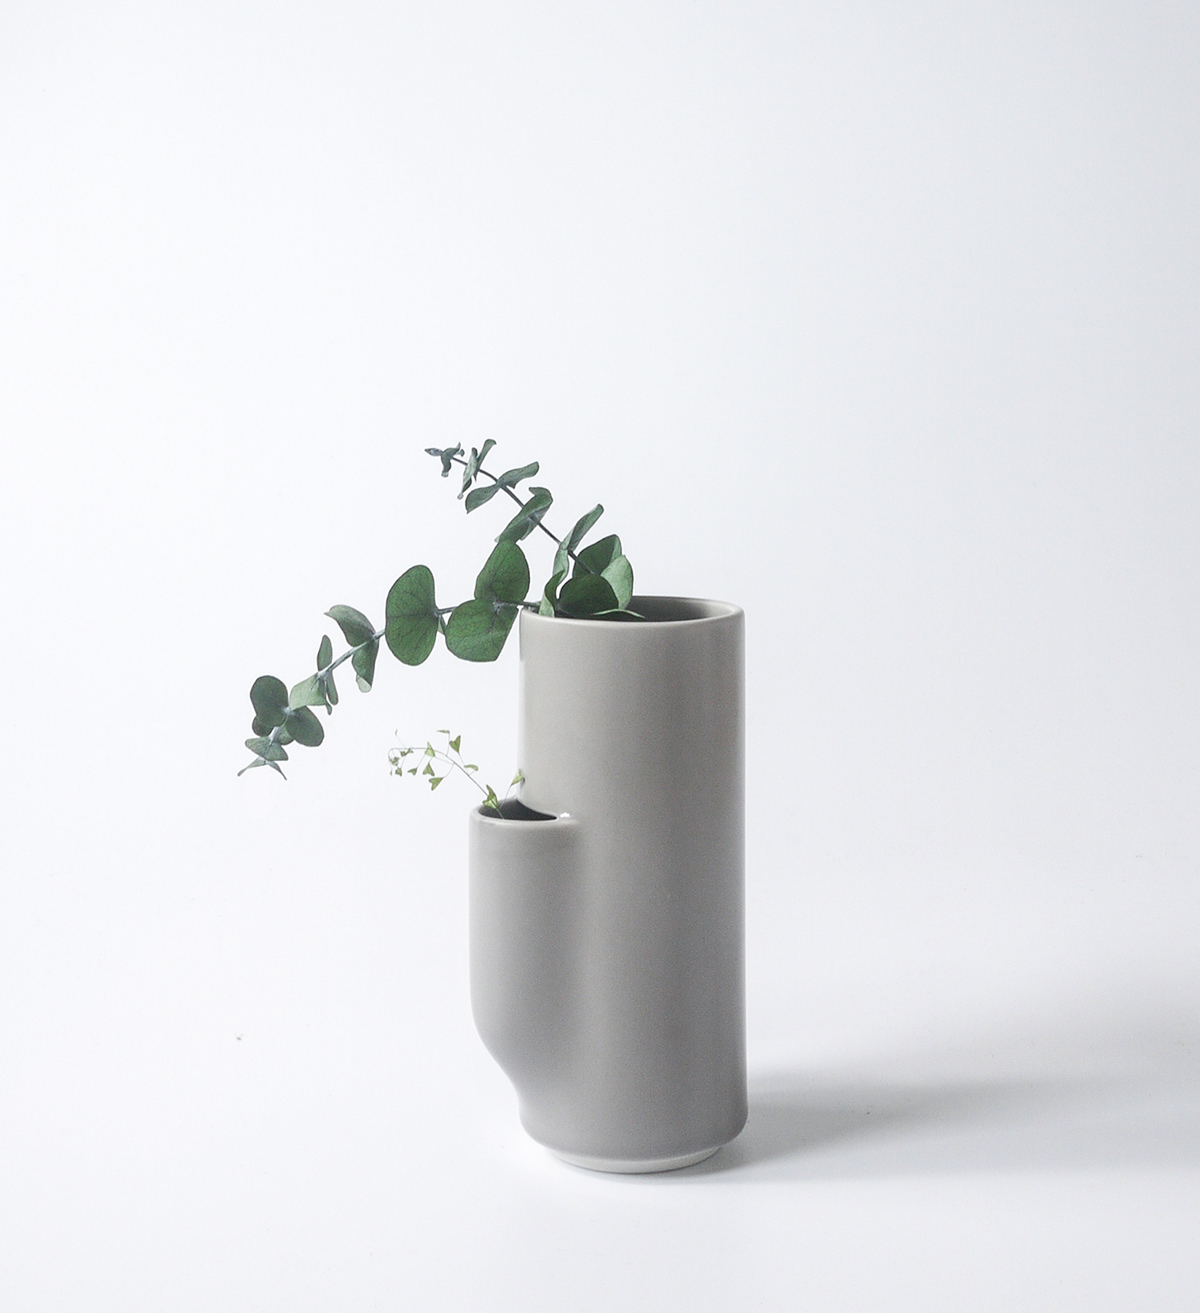 ceramics  Vase industrial design  hyejinlee